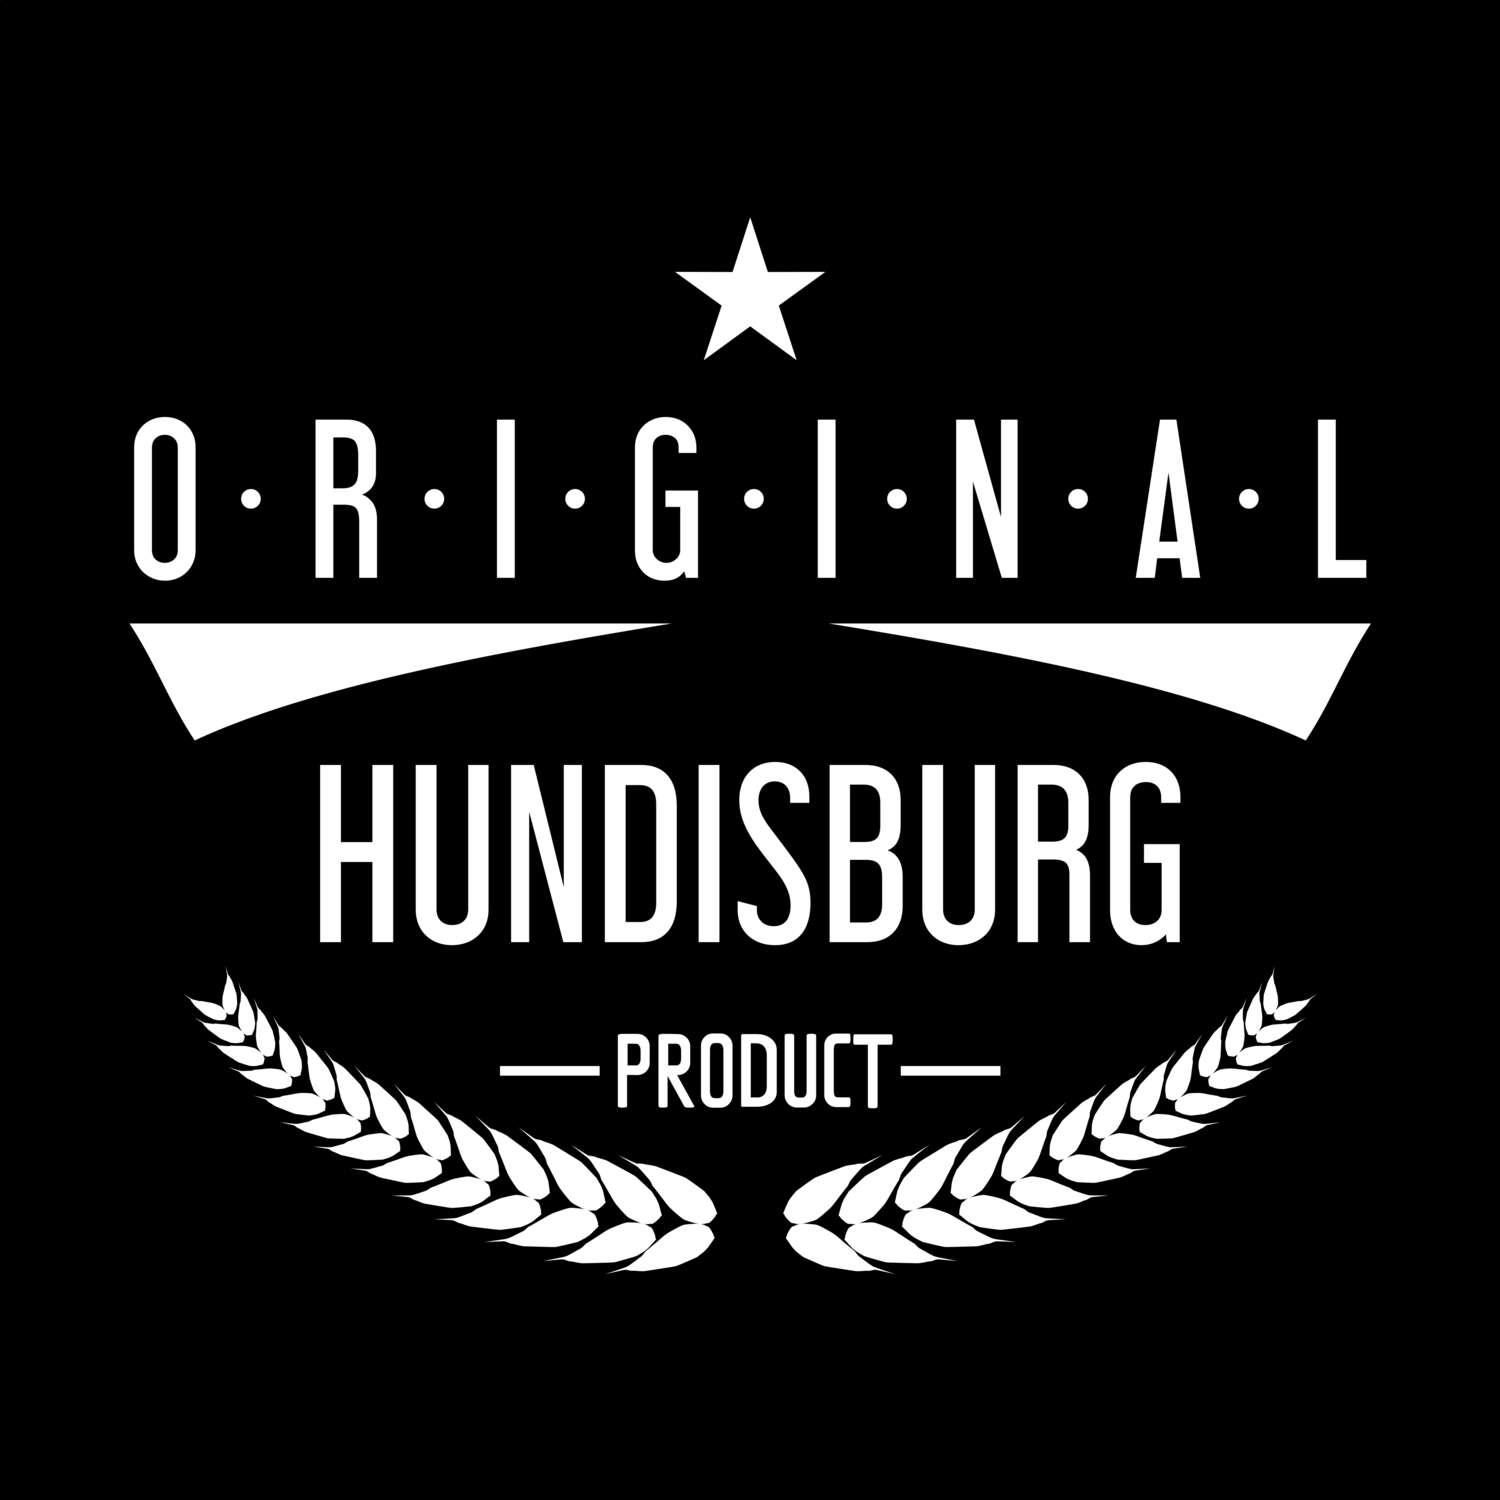 Hundisburg T-Shirt »Original Product«